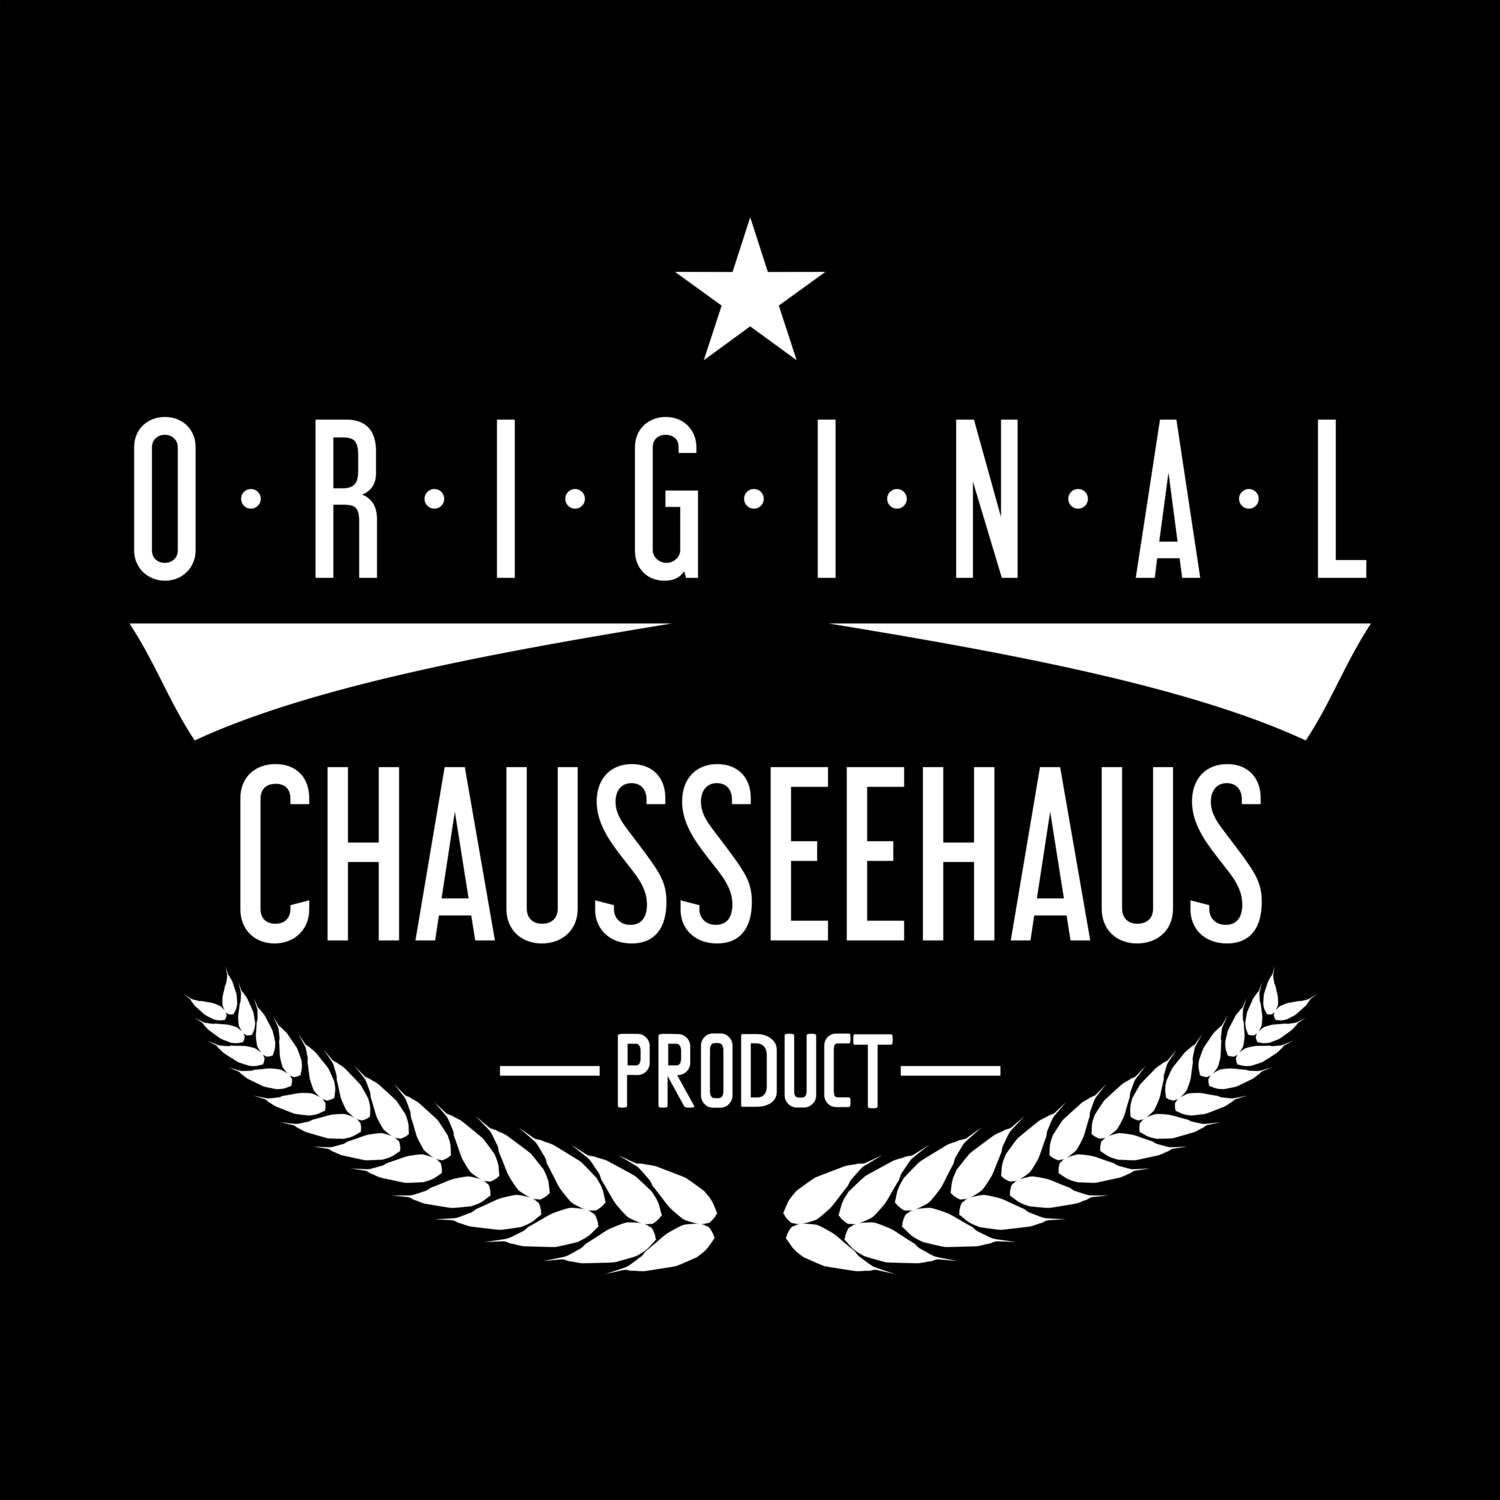 Chausseehaus T-Shirt »Original Product«